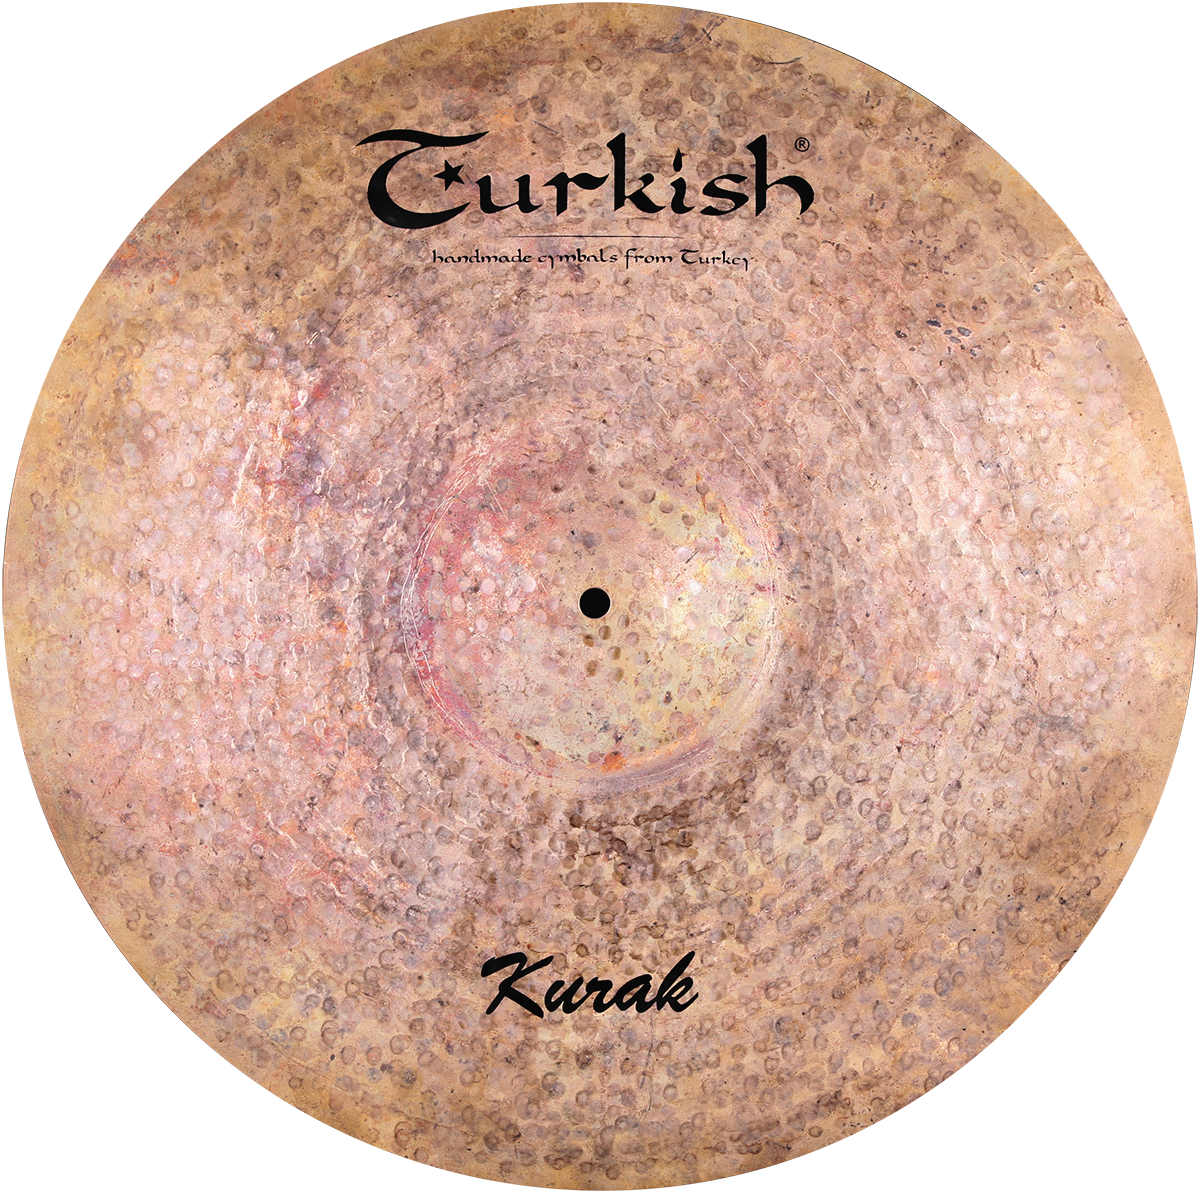 Turkish Kurak 15″ Hihat Cymbal Pair